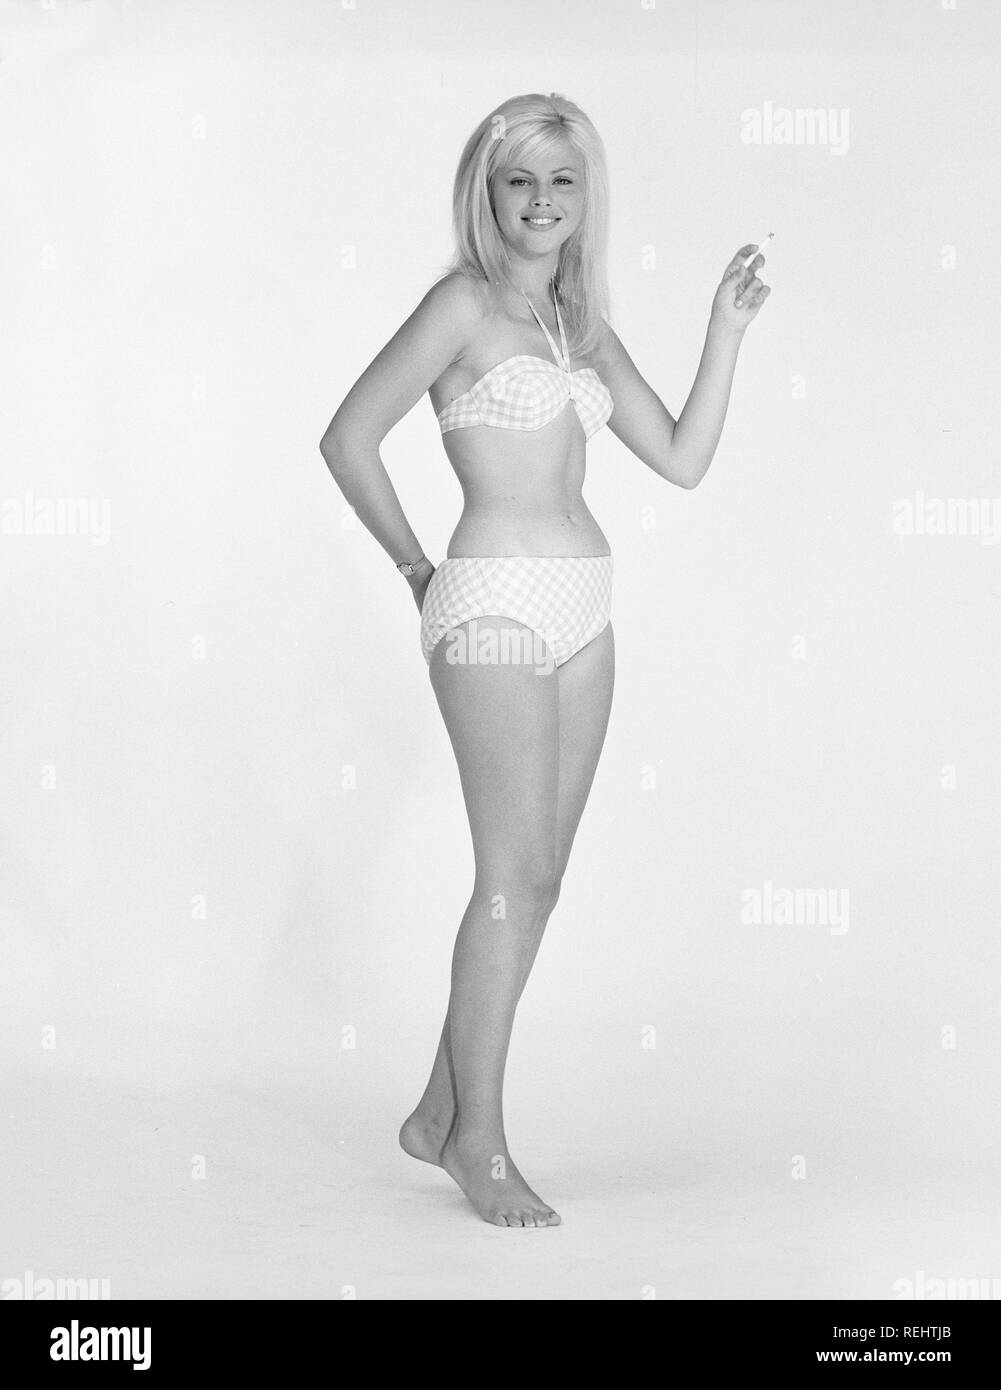 1960s Bikini Stockfotos Und Bilder Kaufen Alamy